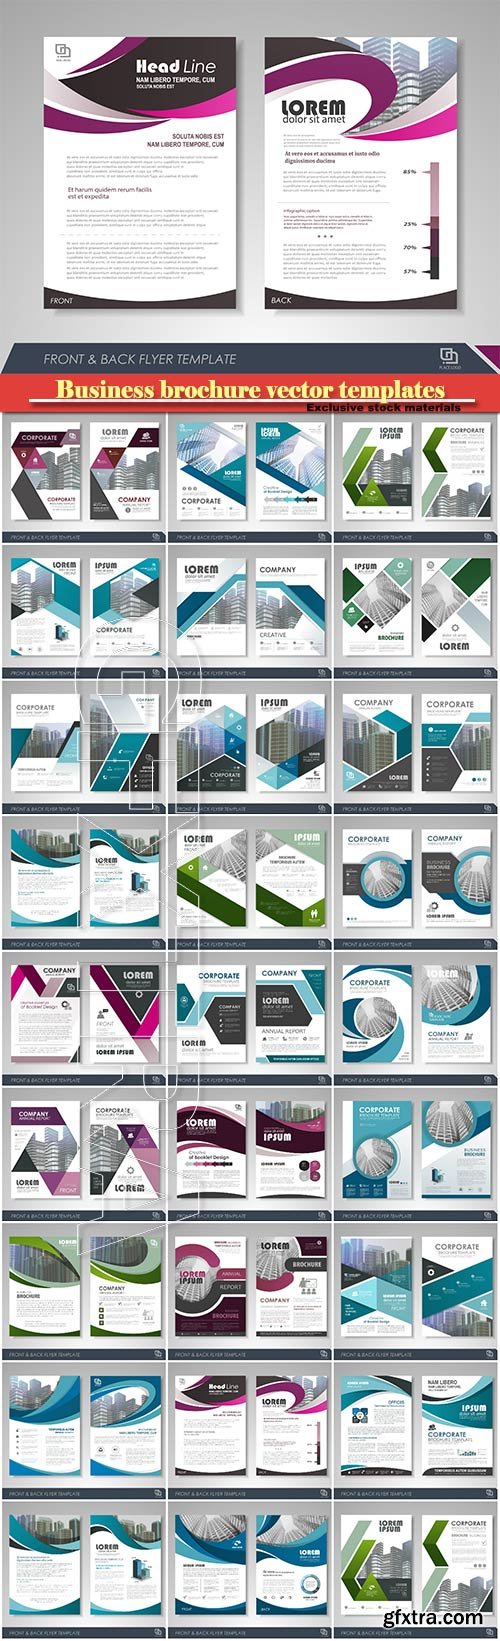 Business brochure vector, flyers templates # 23